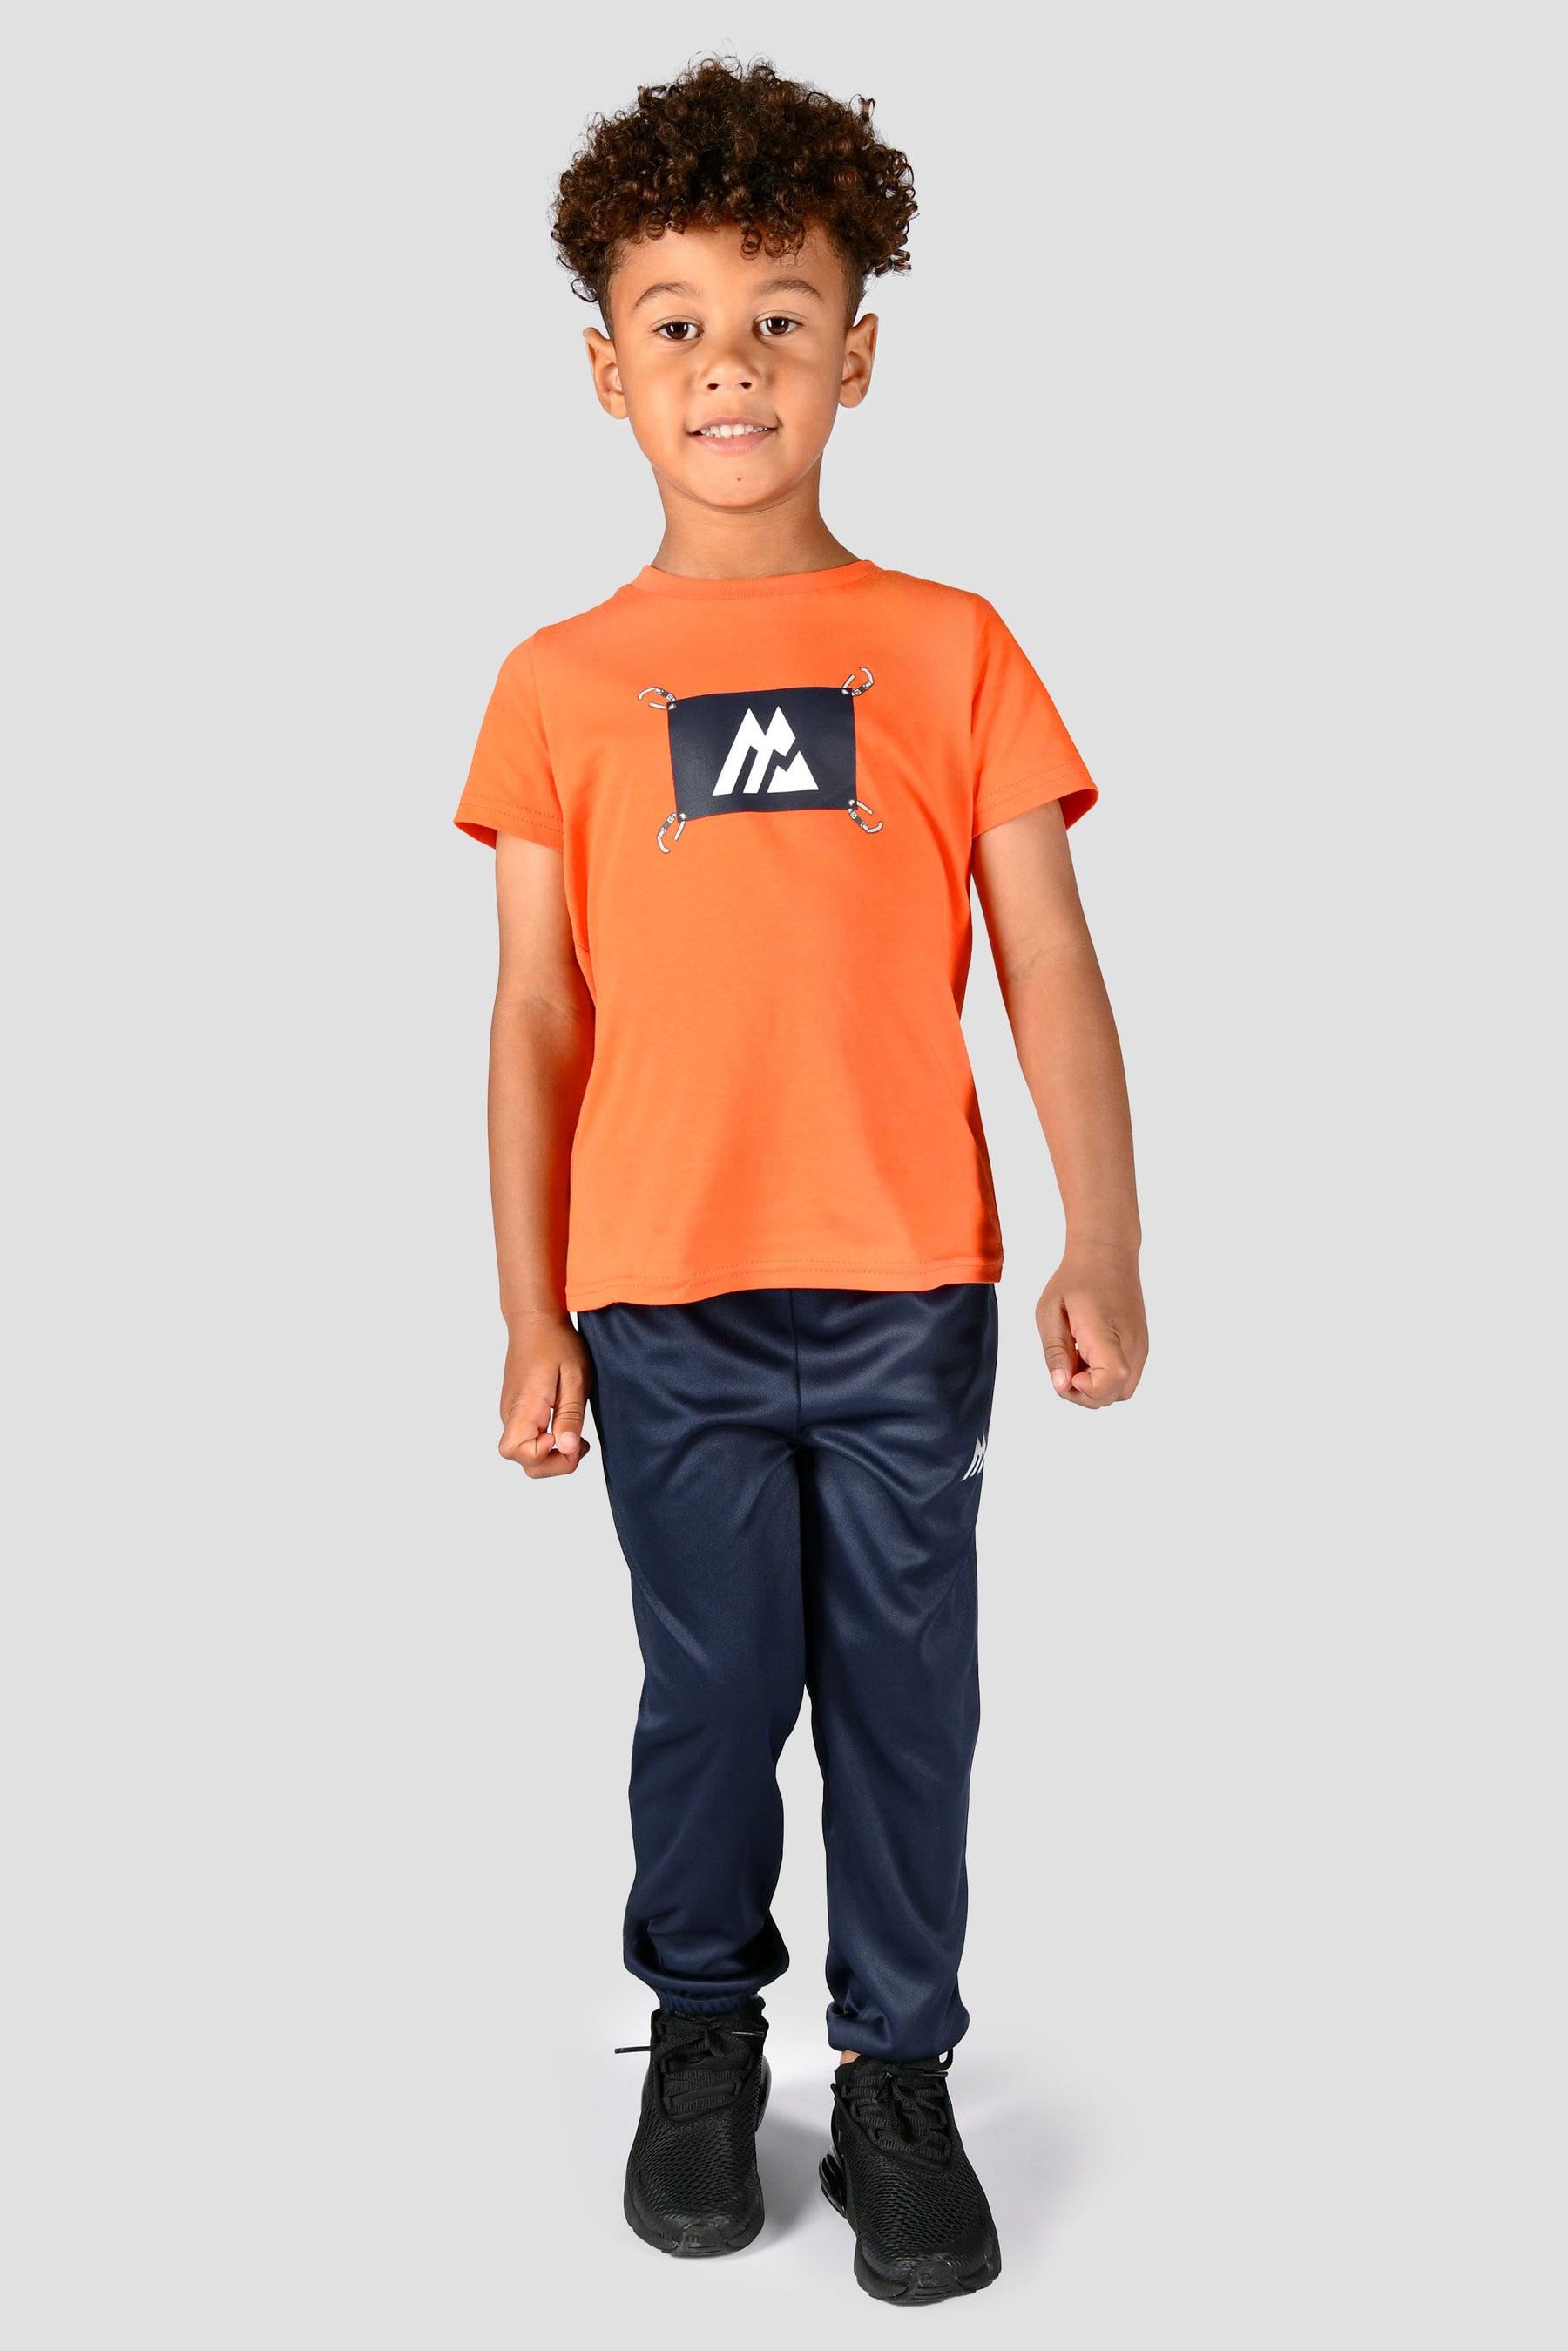 Infants Boulder T-Shirt/Poly Pant Set - Fiery Orange/Midnight Blue